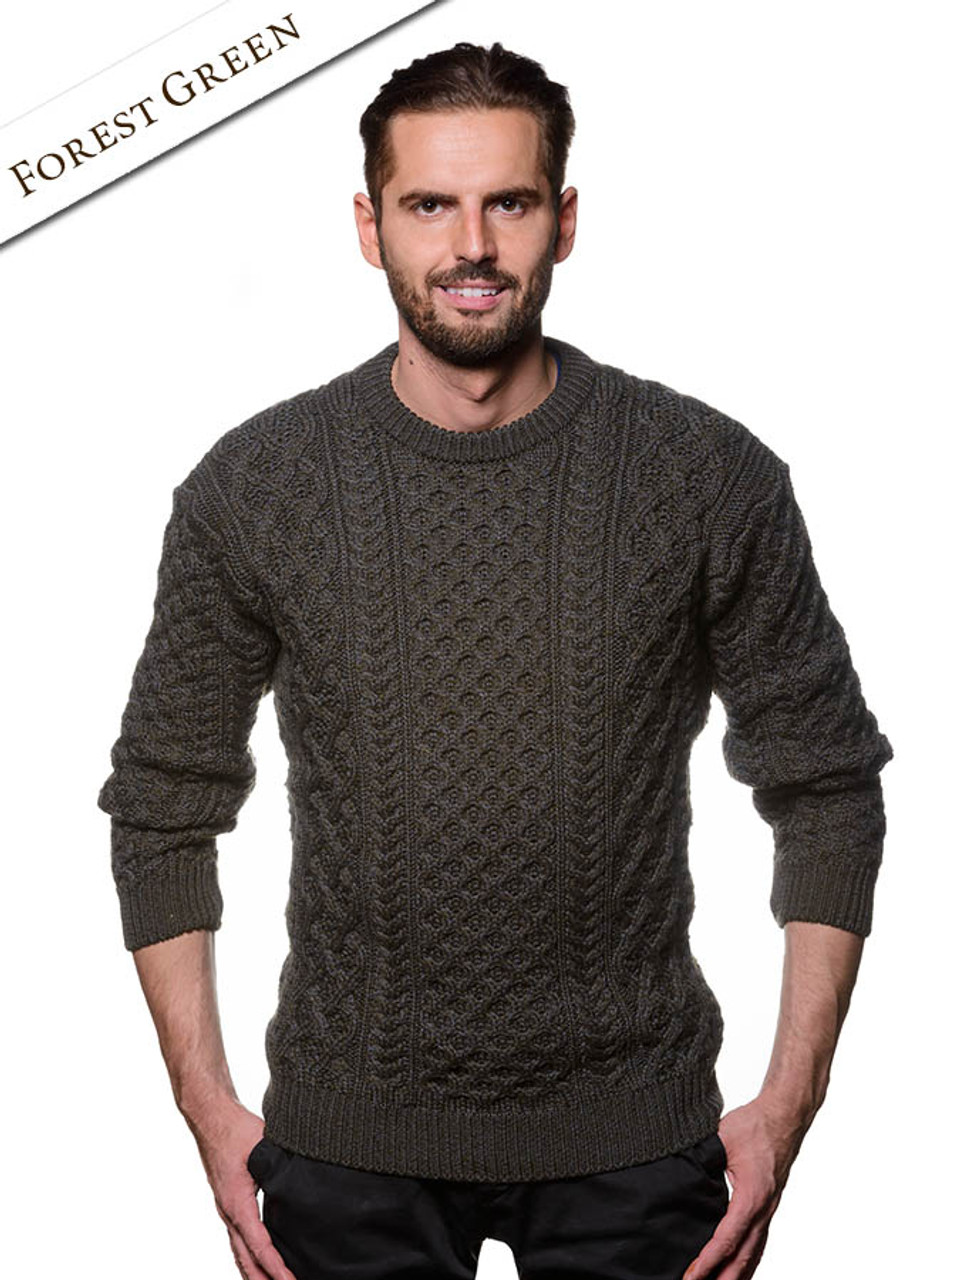 Merino Wool Aran Sweater From Glenaran [Crafted In Ireland]